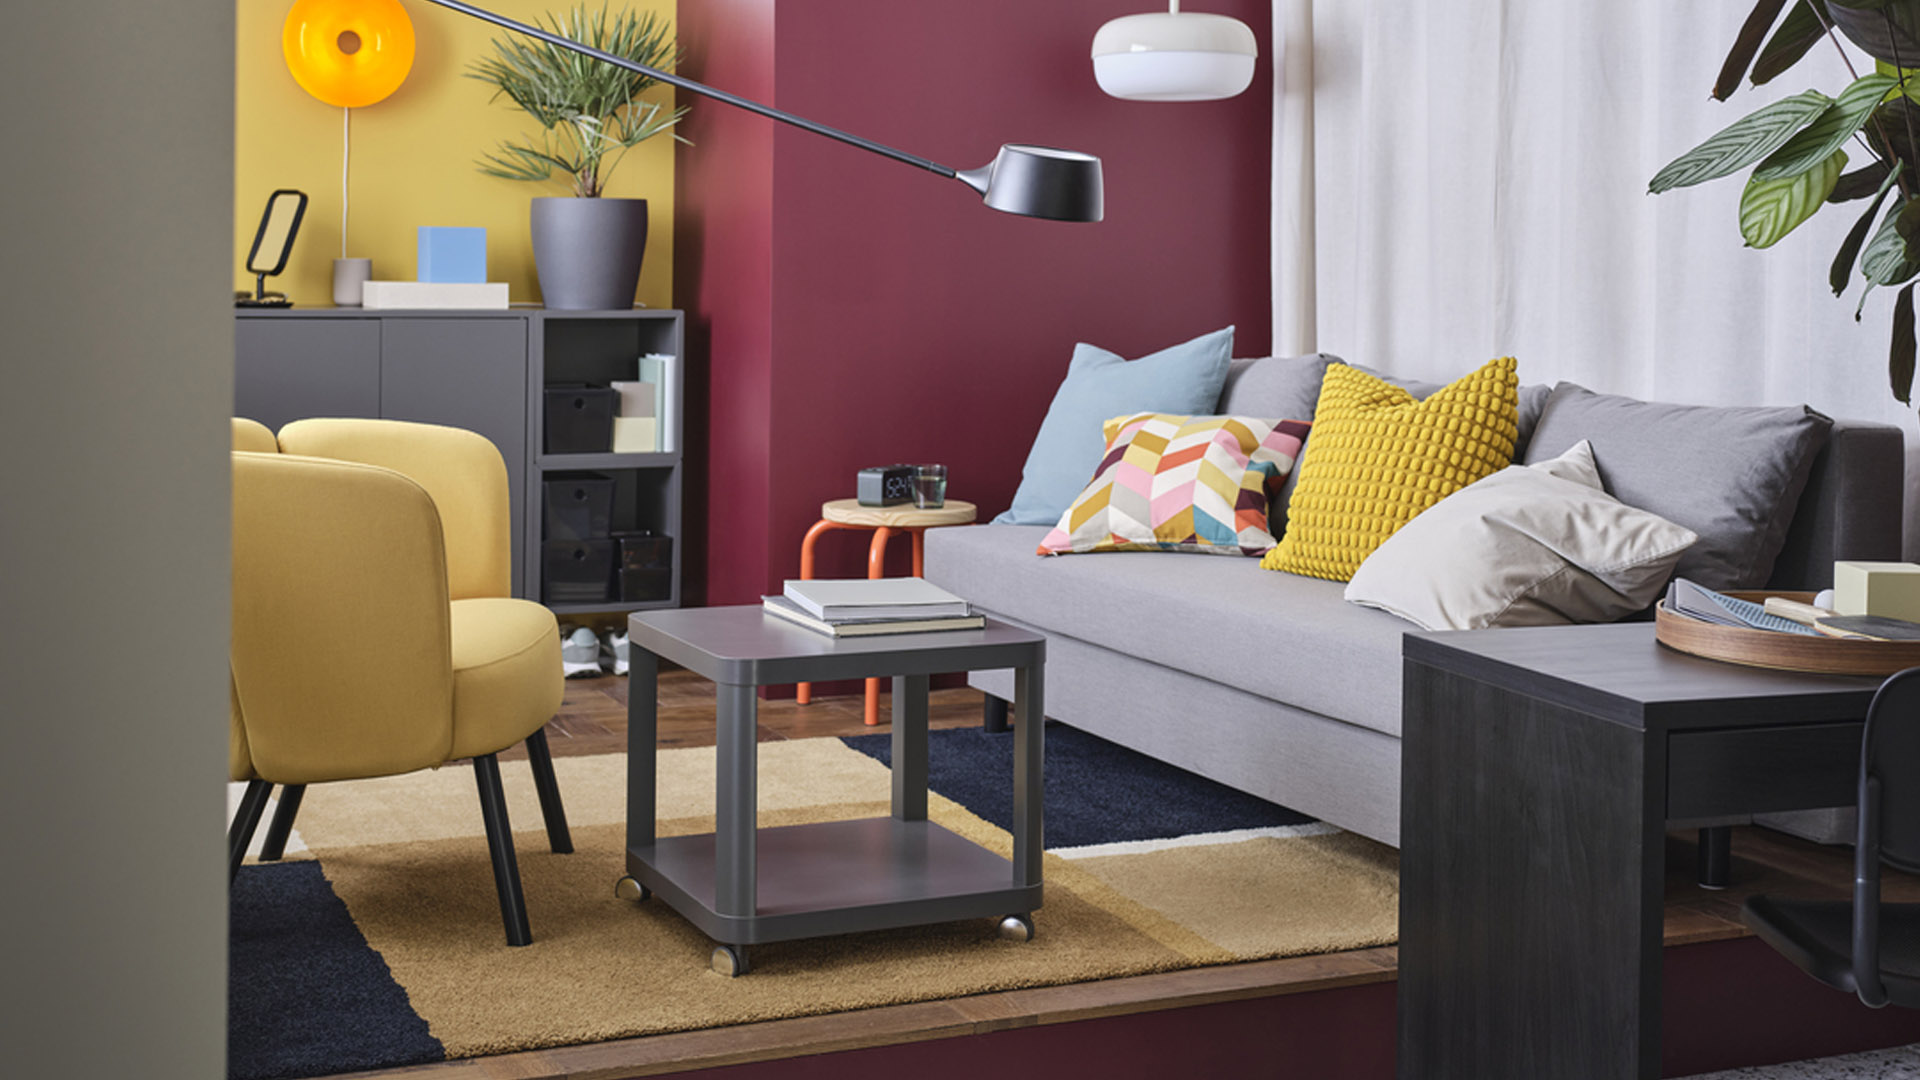 IKEA - Ένα σαλόνι με ρετρό αίσθηση και ευρύχωρη αποθήκευση